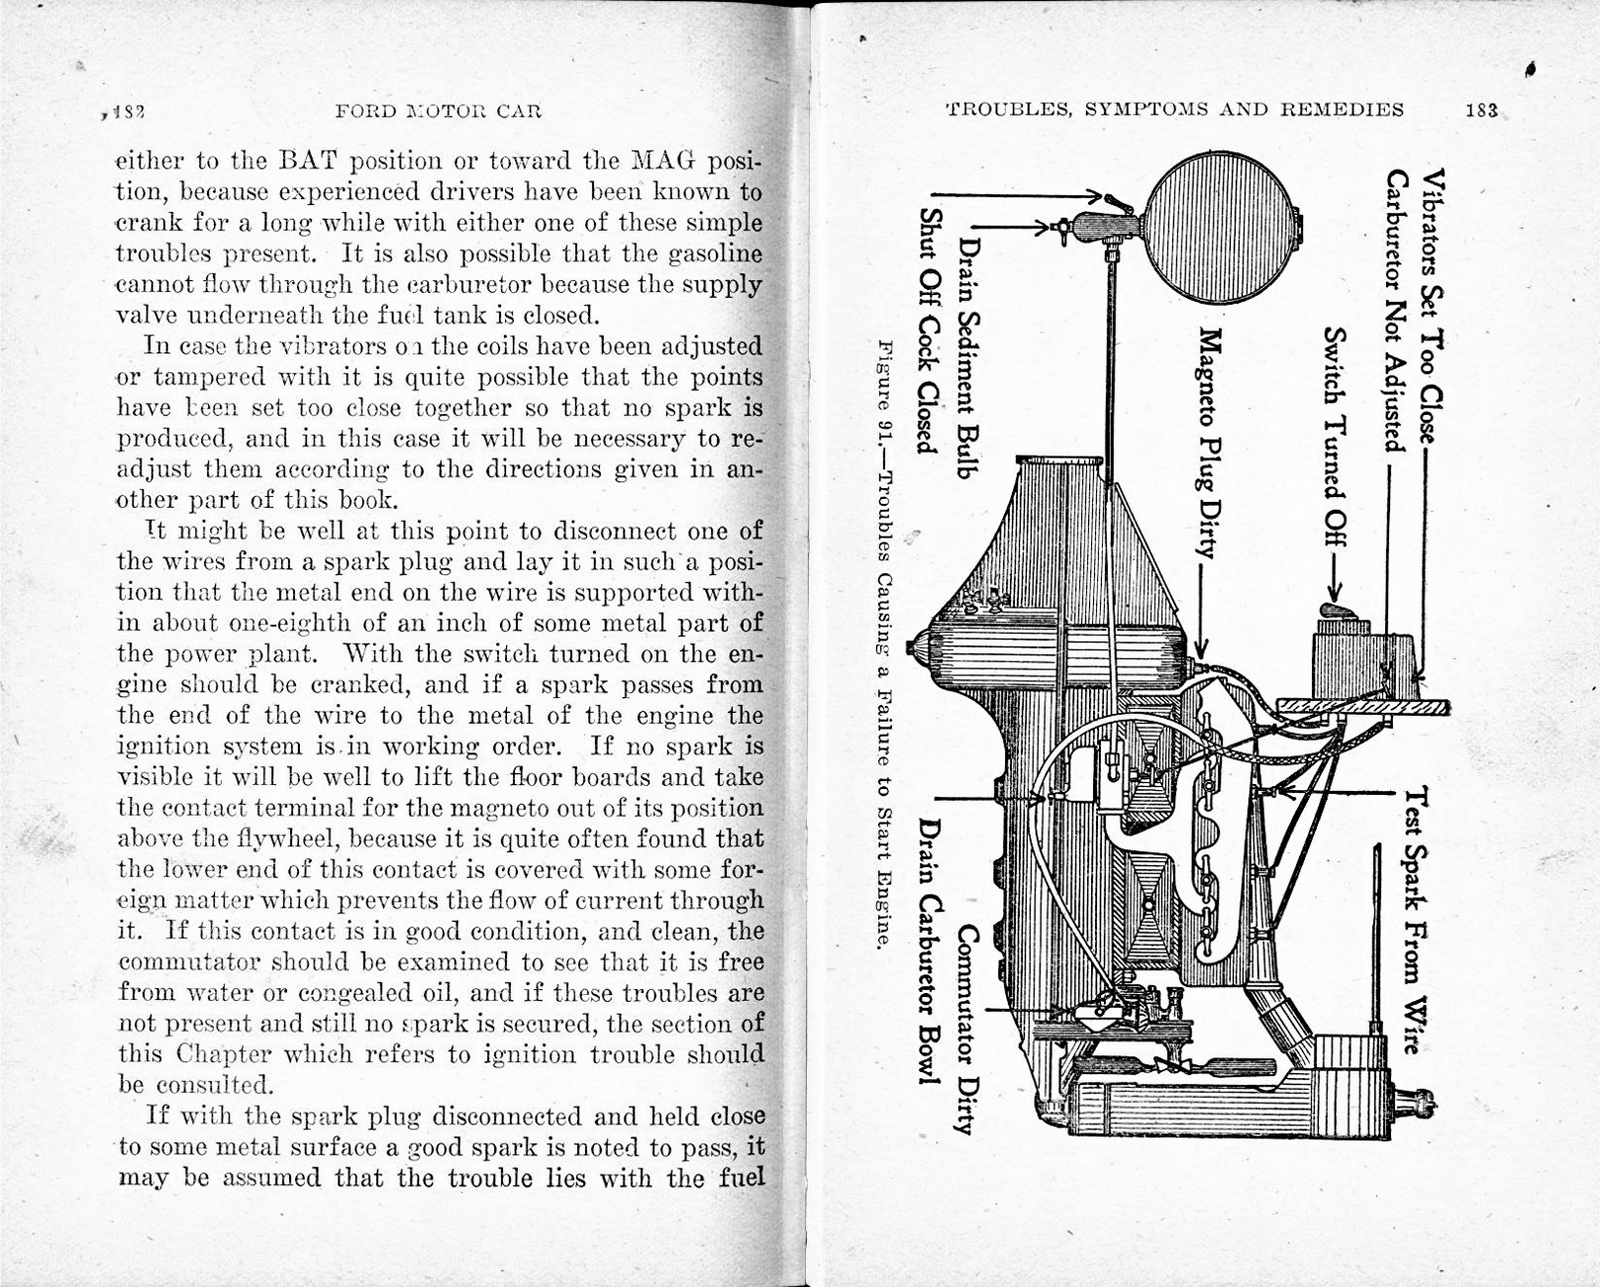 n_1917 Ford Car & Truck Manual-182-183.jpg